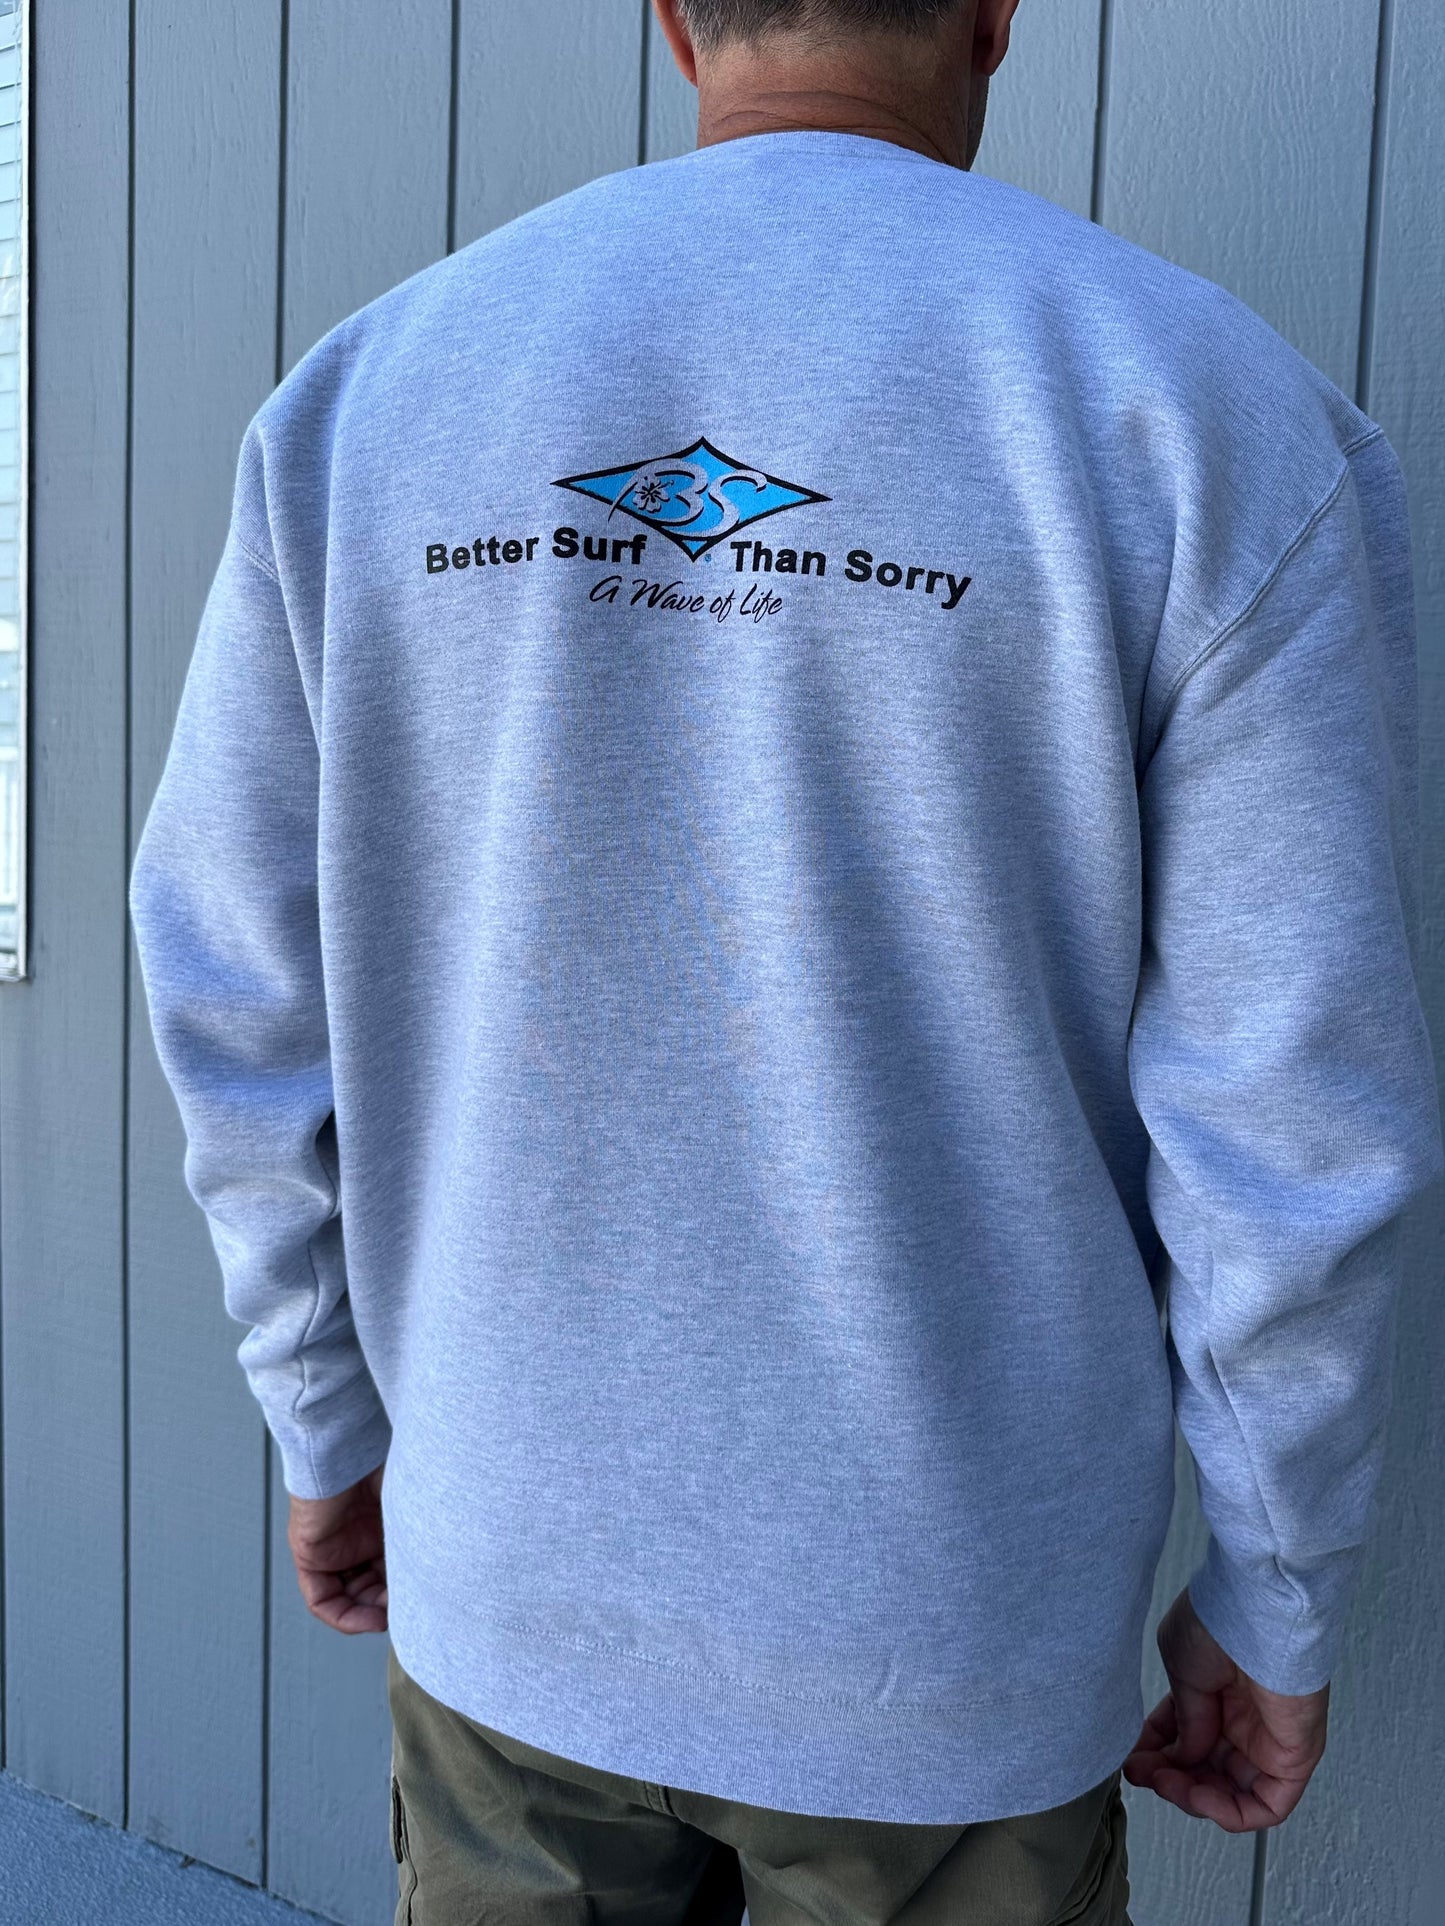 Better Surf than Sorry crew neck sweatshirts